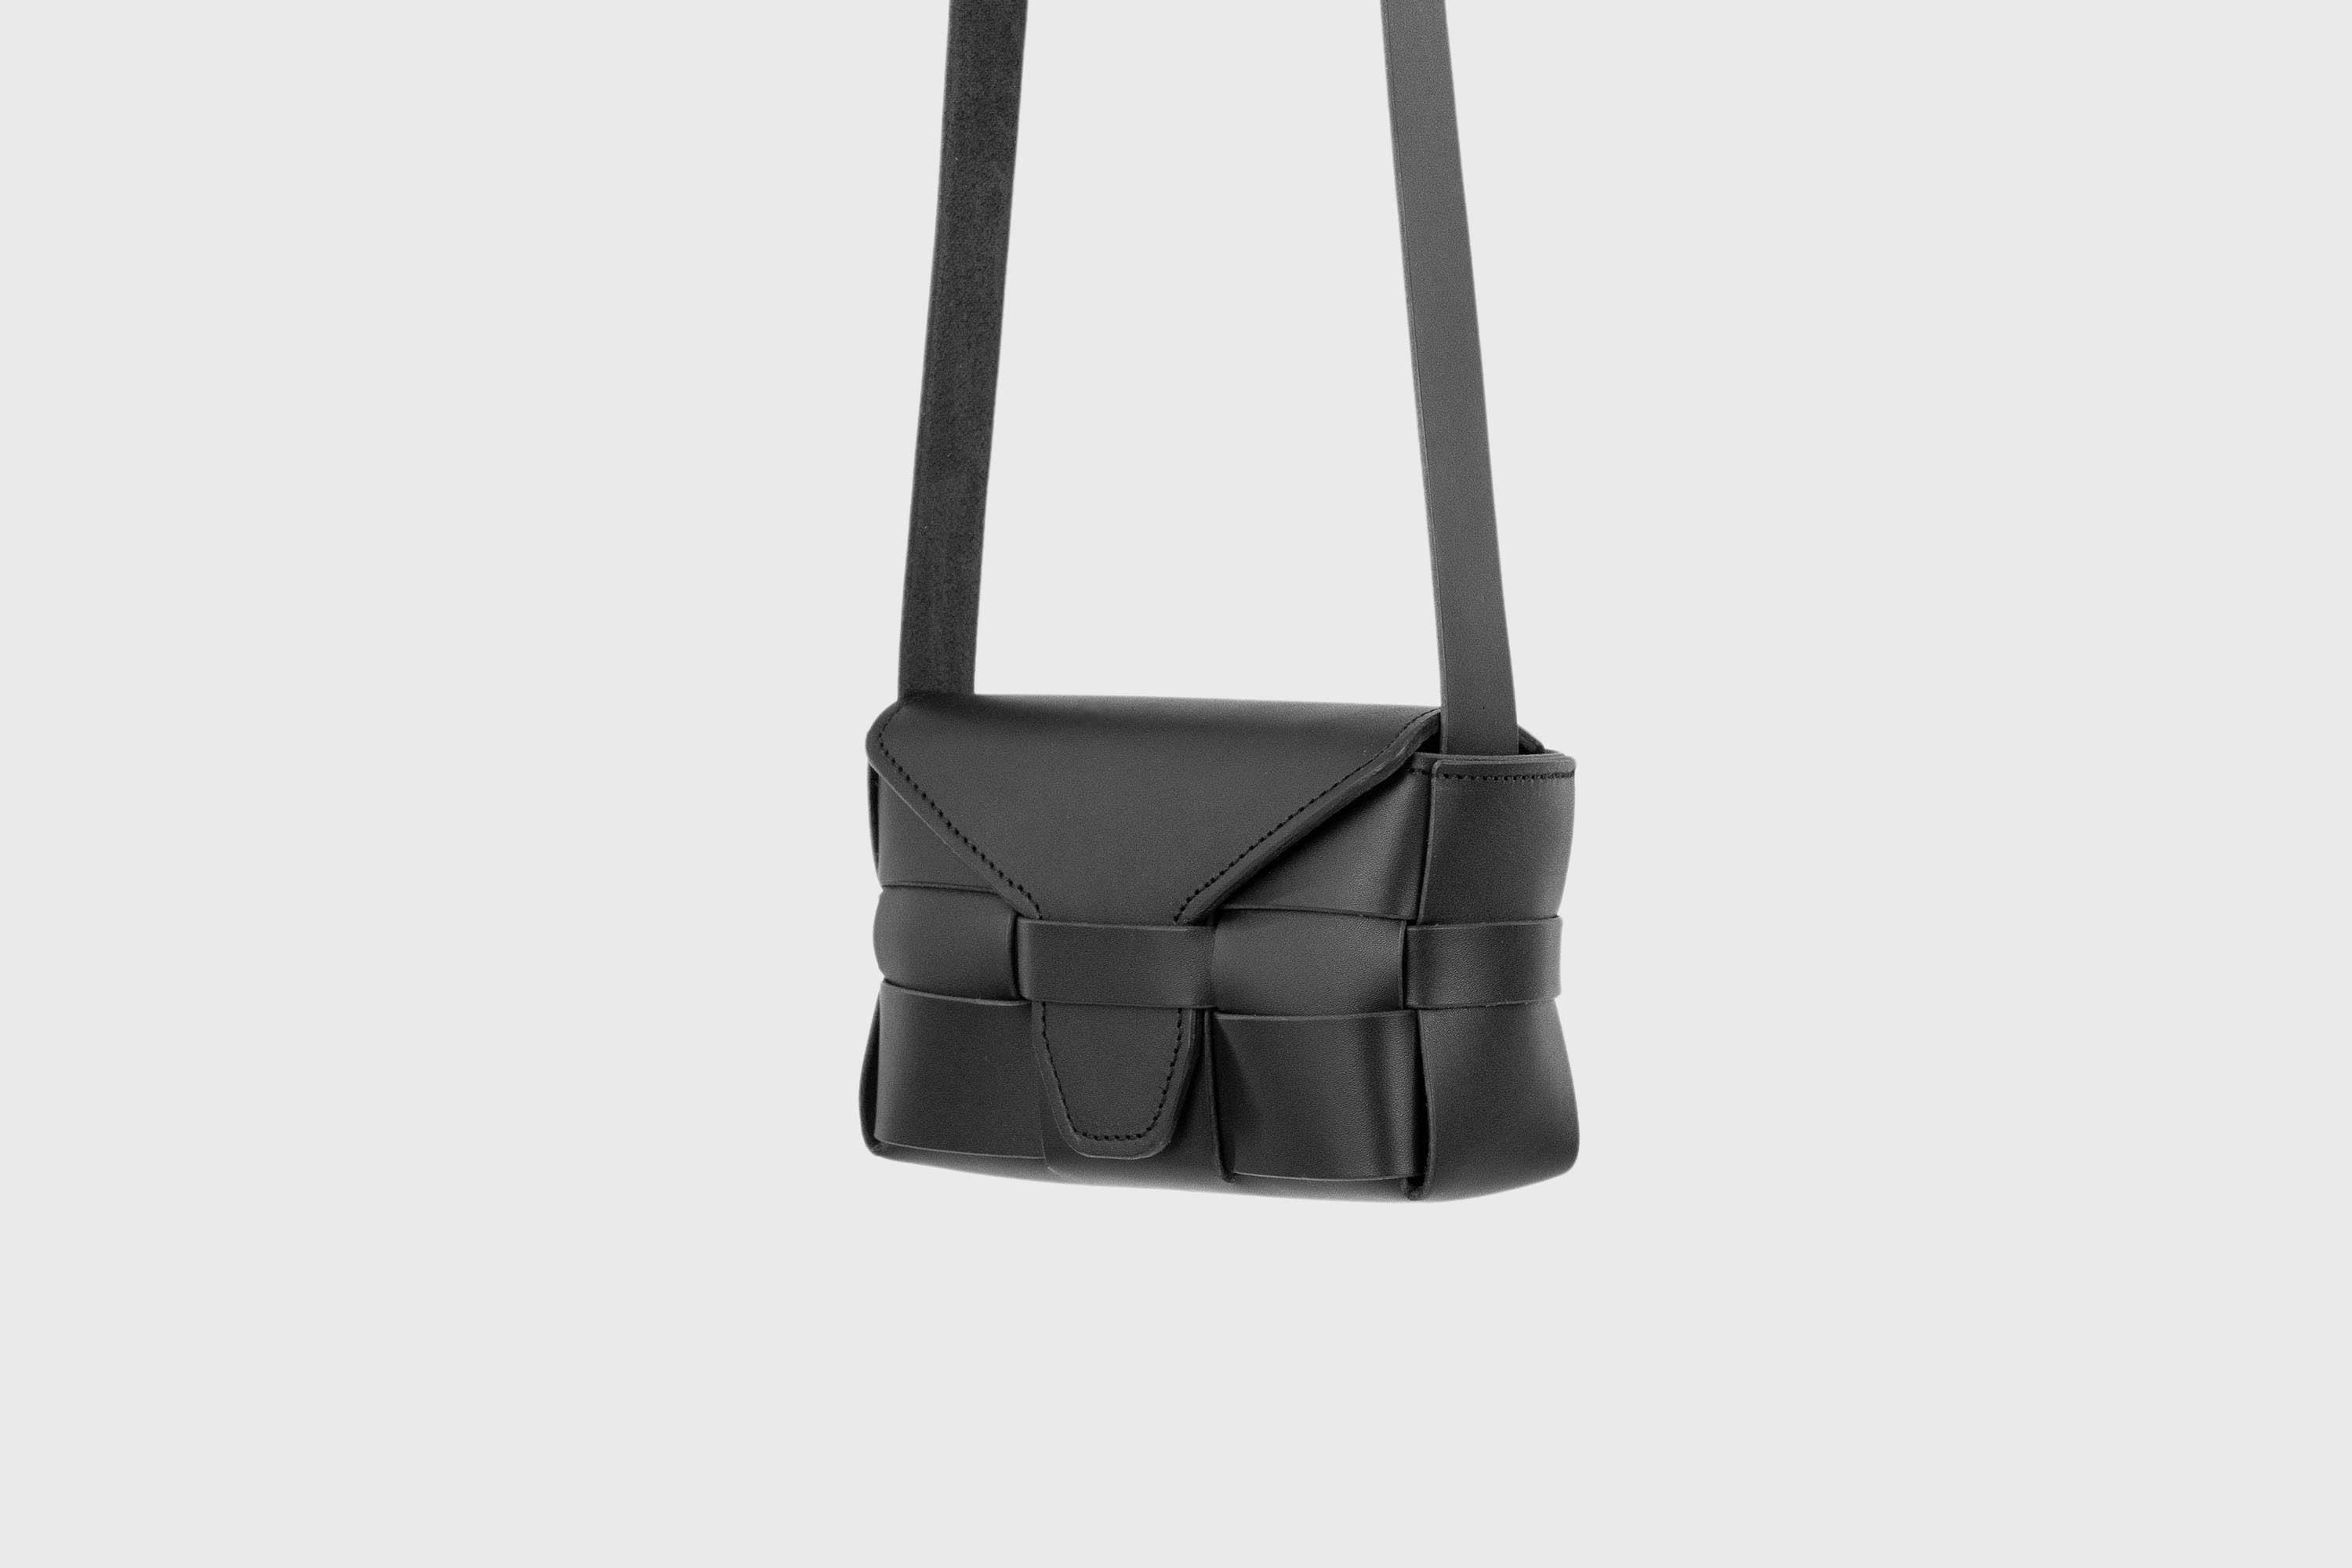 Woven Leather Bag Saka Small Black Braided Shoulder Bag Crossbody Vegetable Tanned Premium Quality Modern Minimalistic Design Atelier Madre Manuel Dreesmann Barcelona